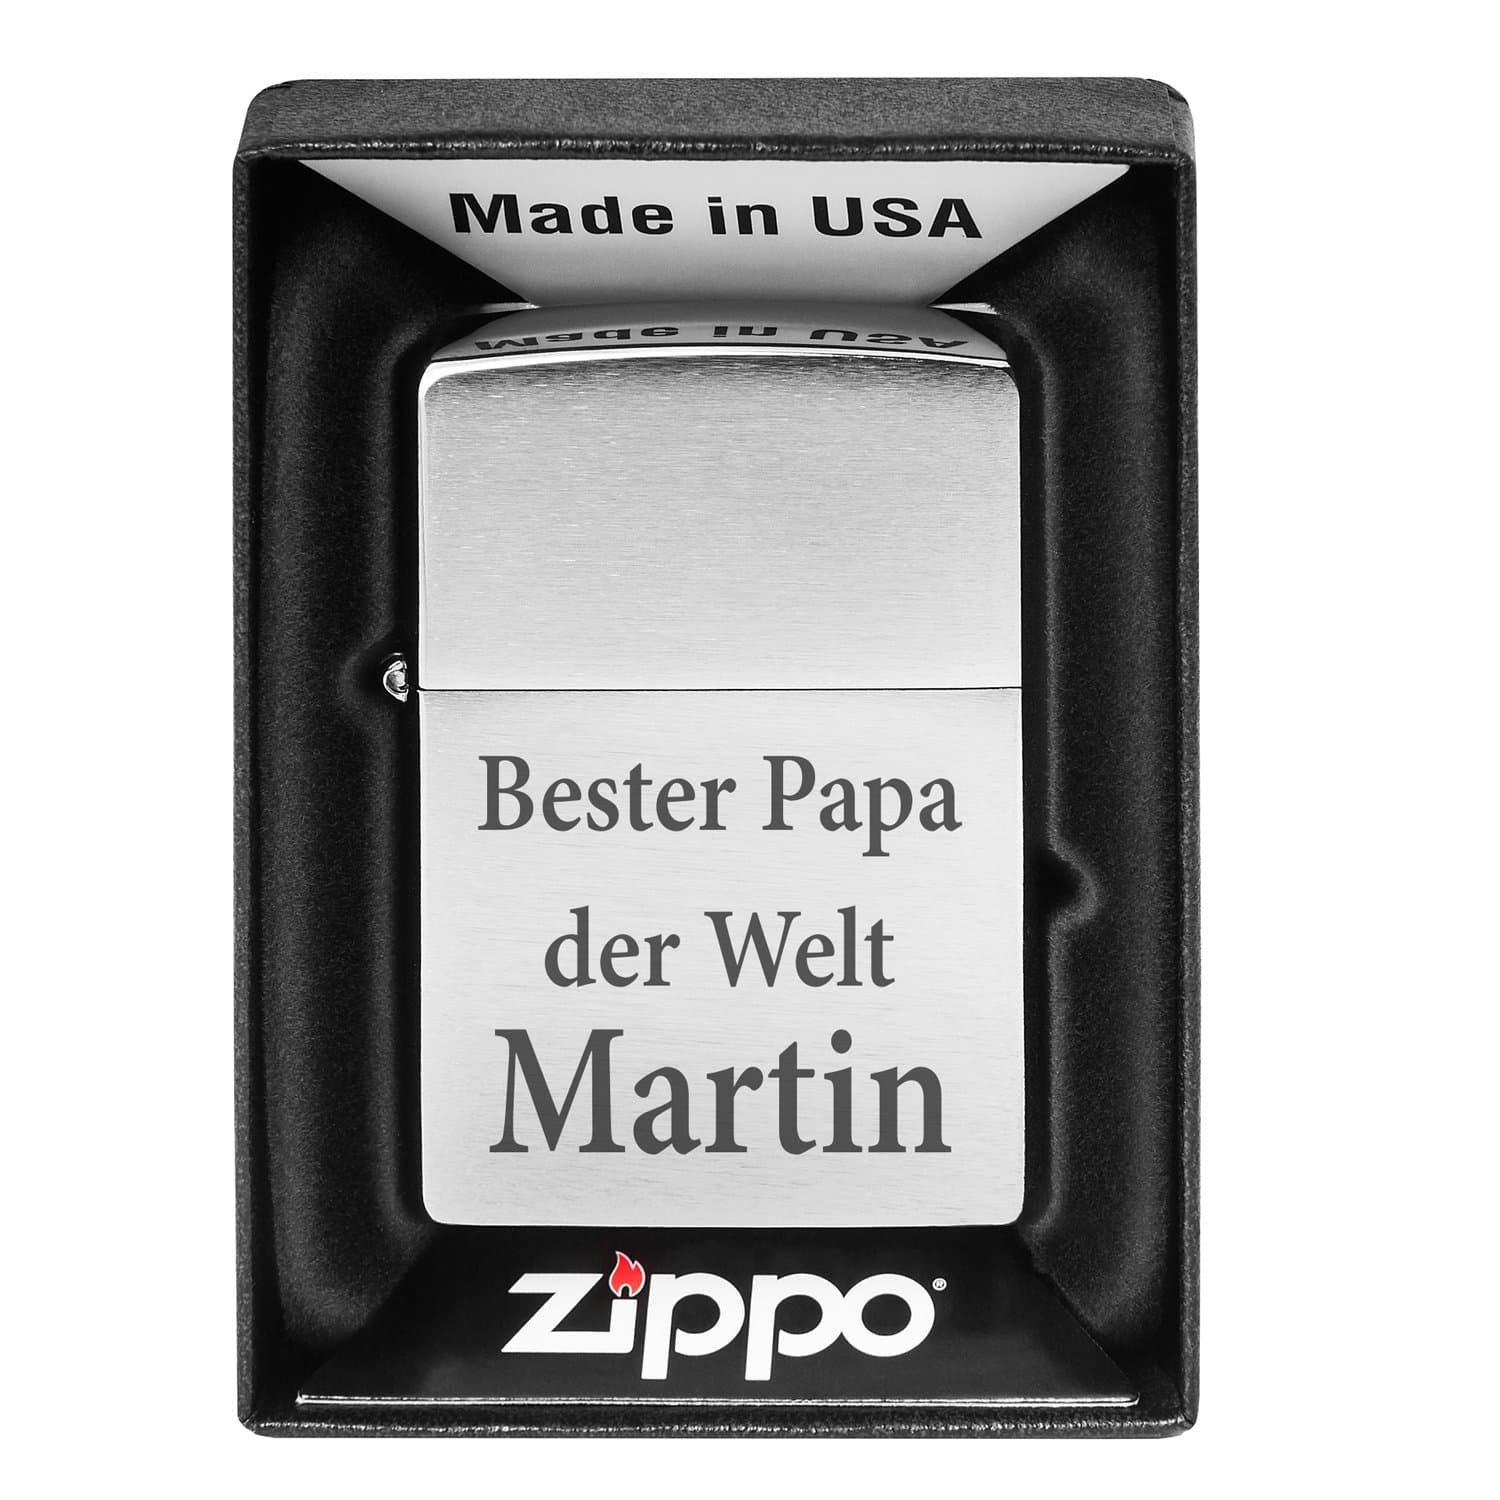 Zippo - Bester Papa